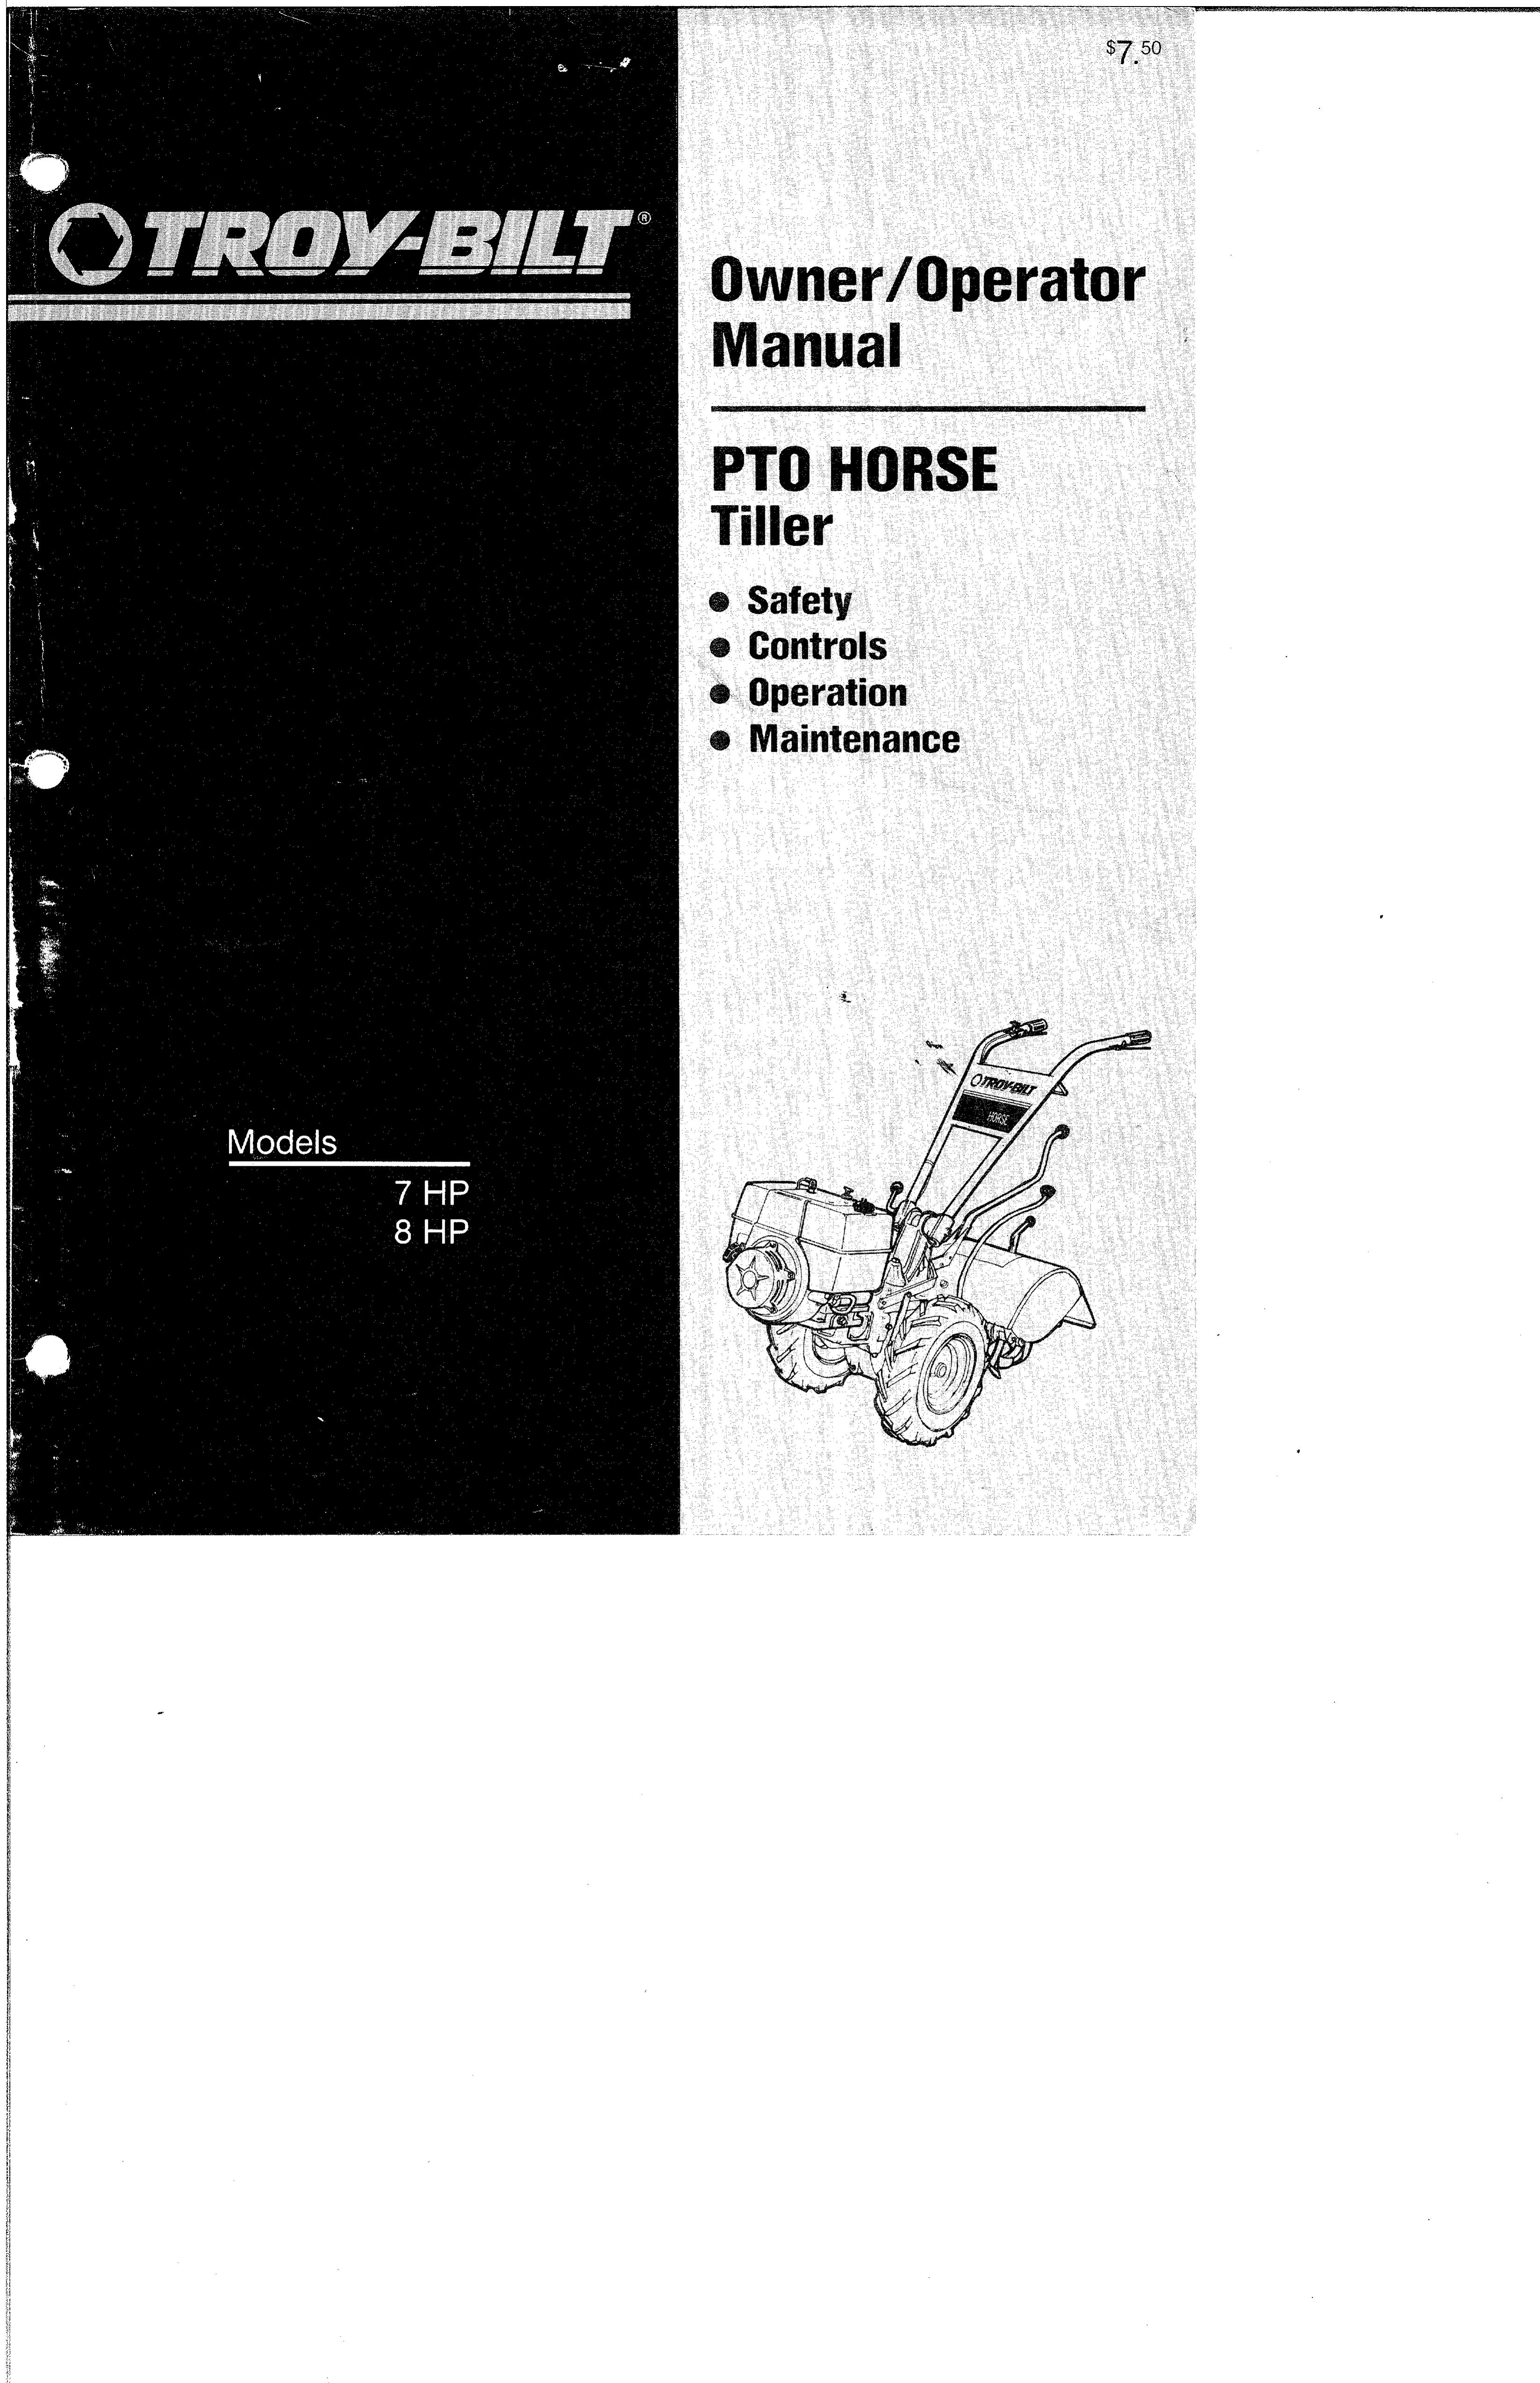 Troy-Bilt 8 HP Chipper User Manual